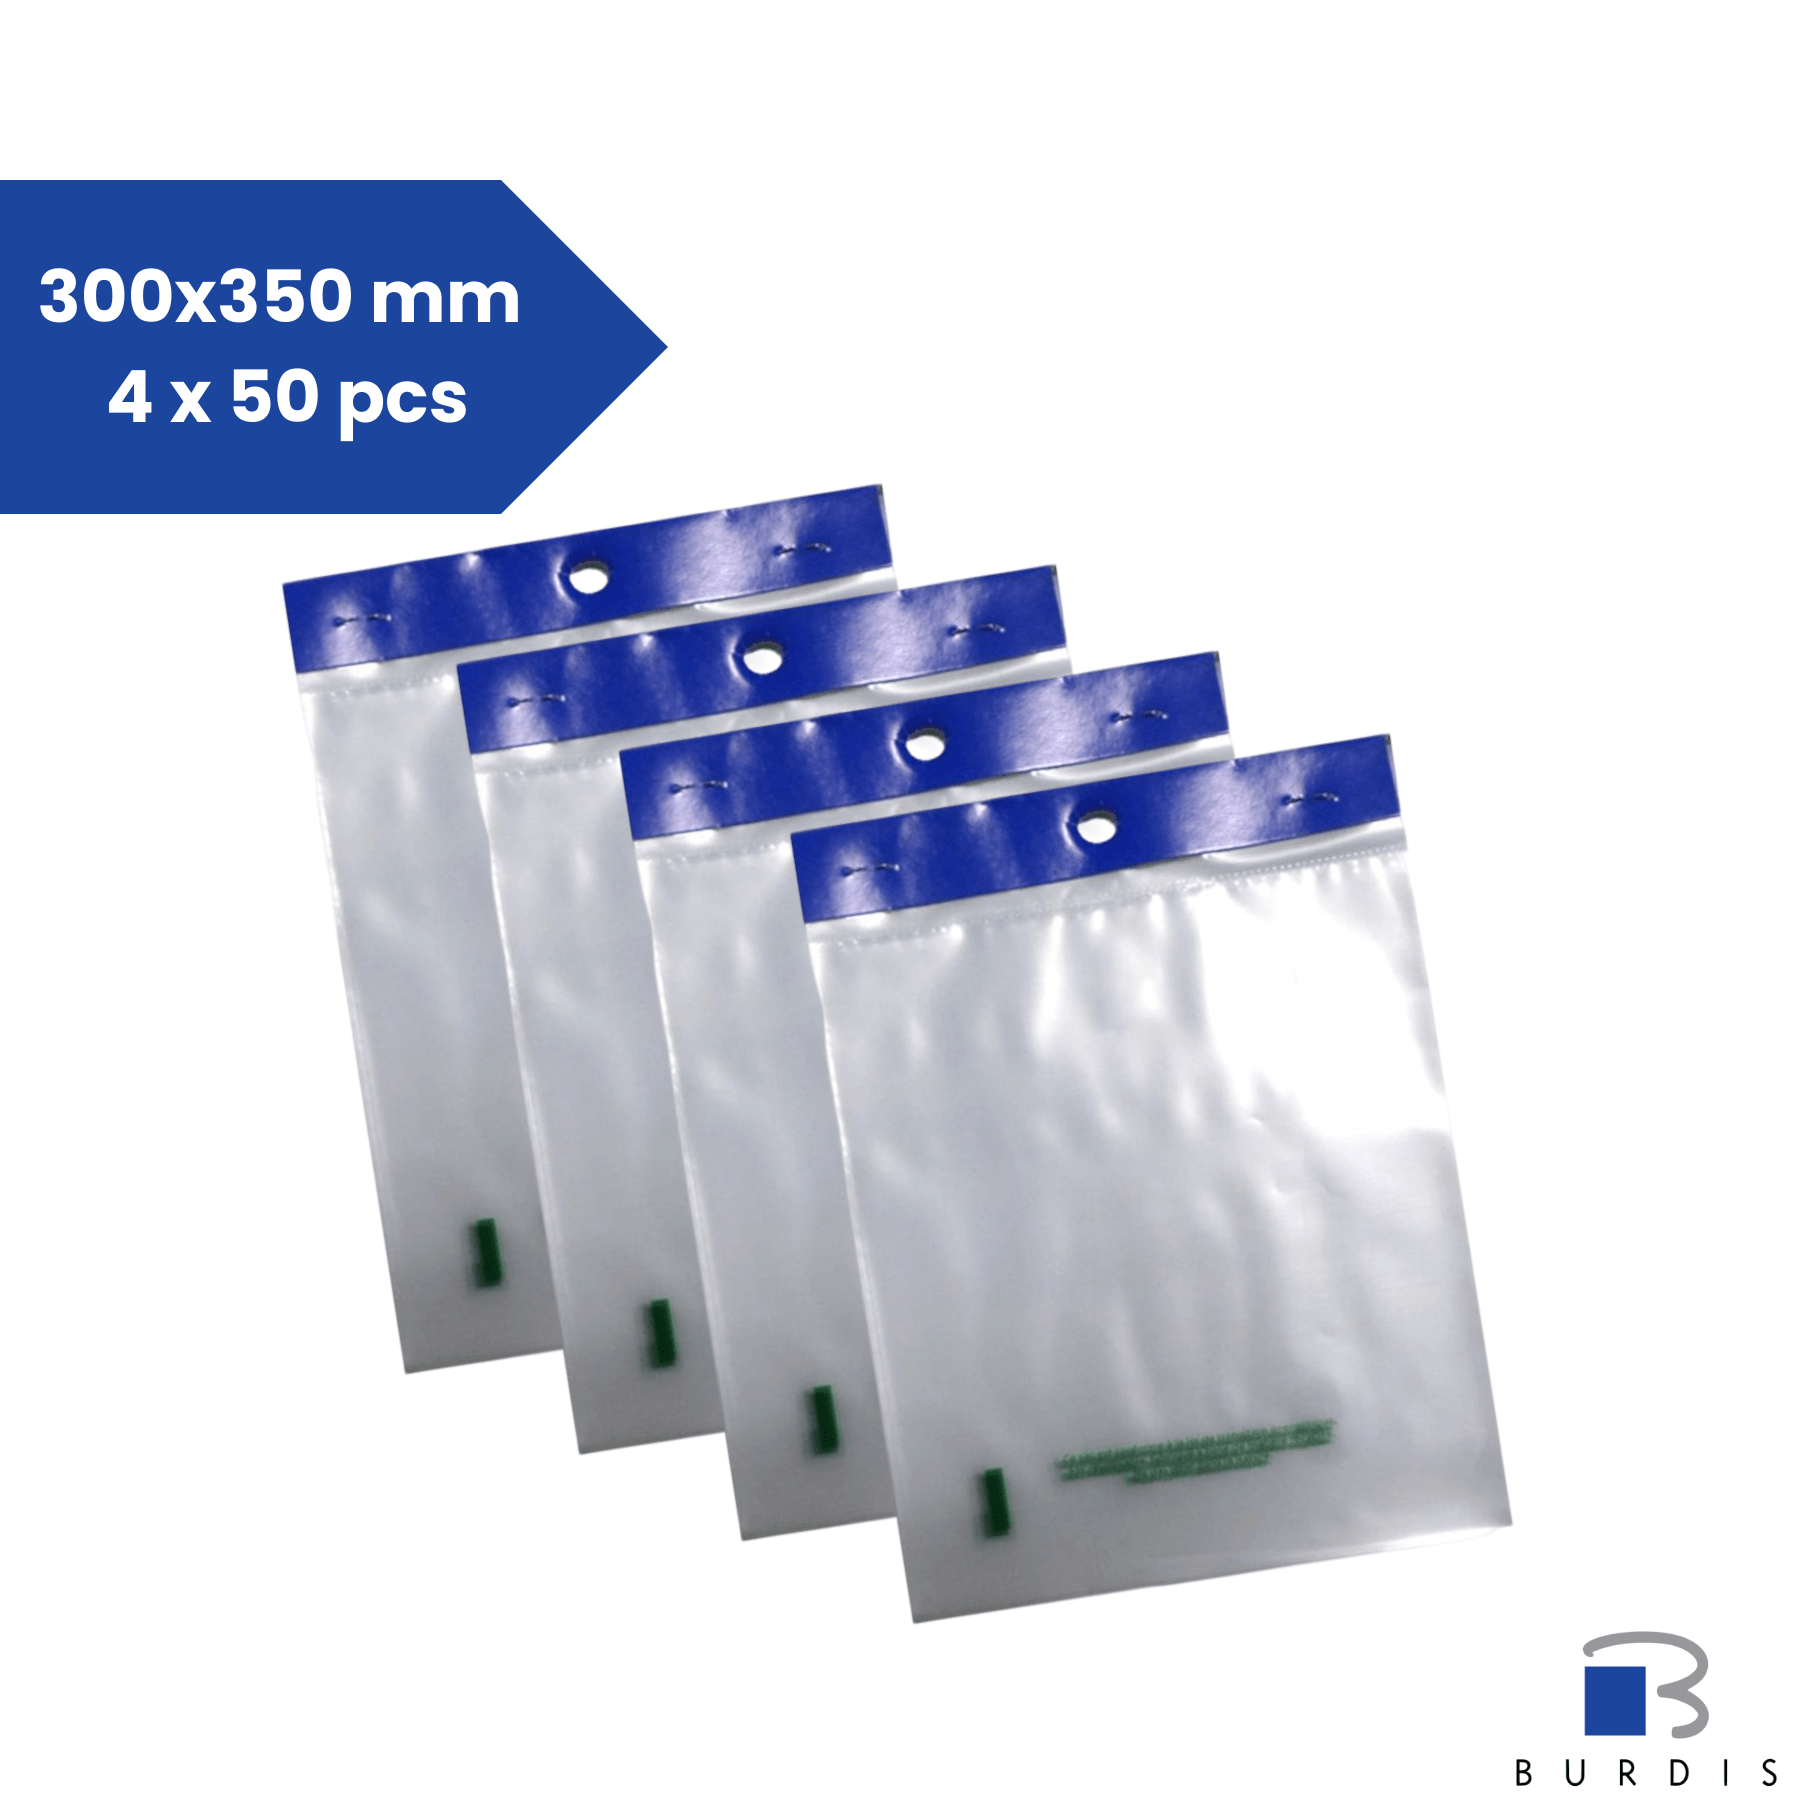 https://media3.burdis.fr/1823-thickbox_default/polyethylene-bags-300x350-200-units.jpg